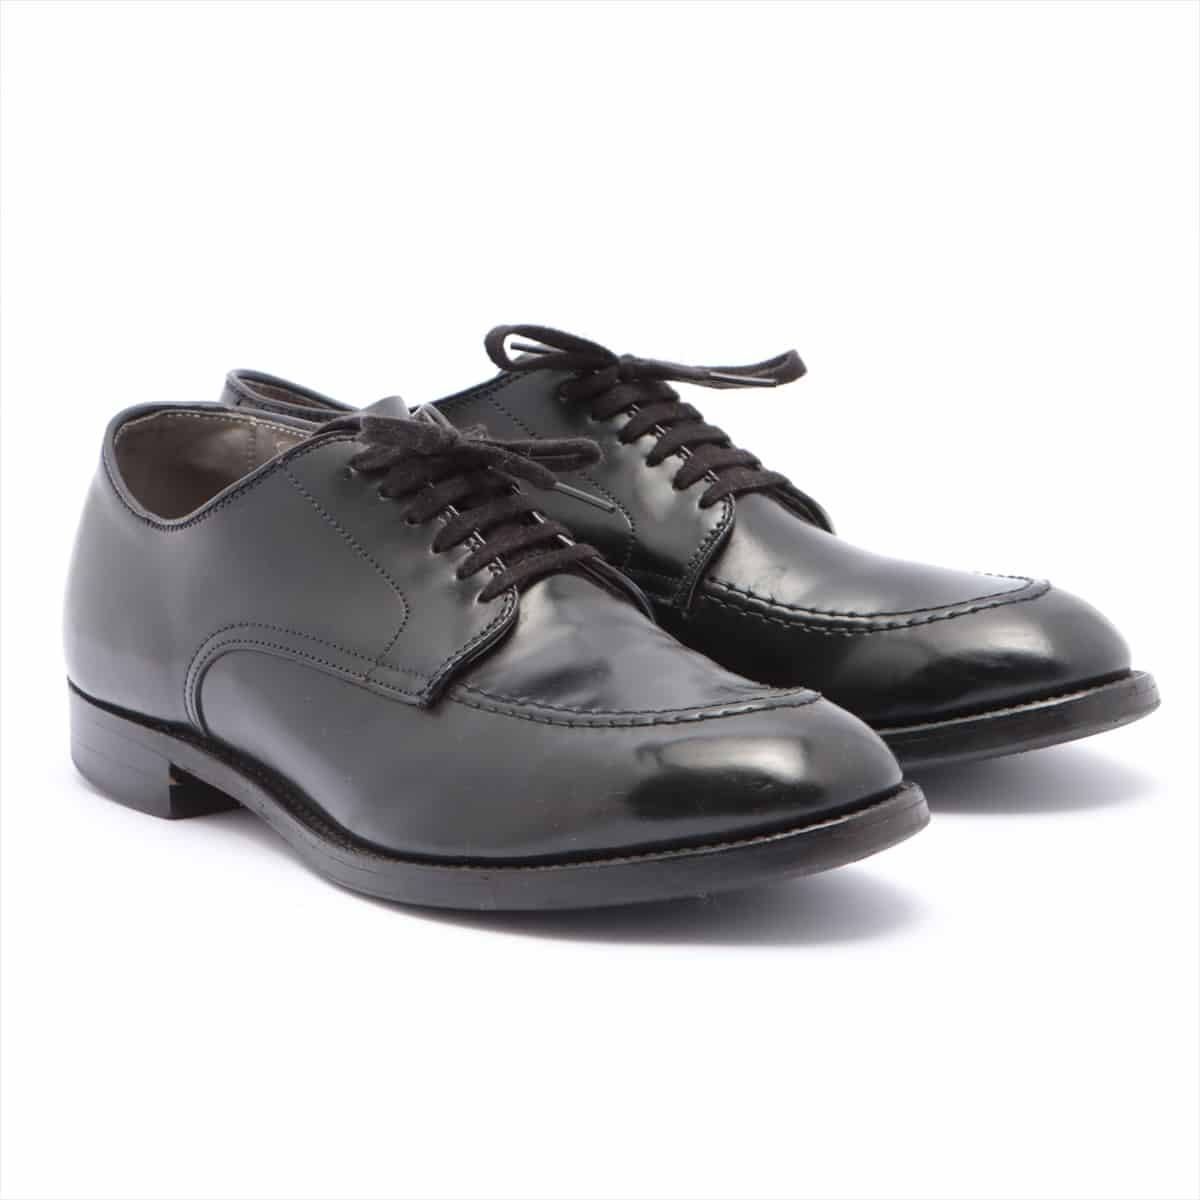 Alden Leather Leather shoes 8 Men's Black Resoled